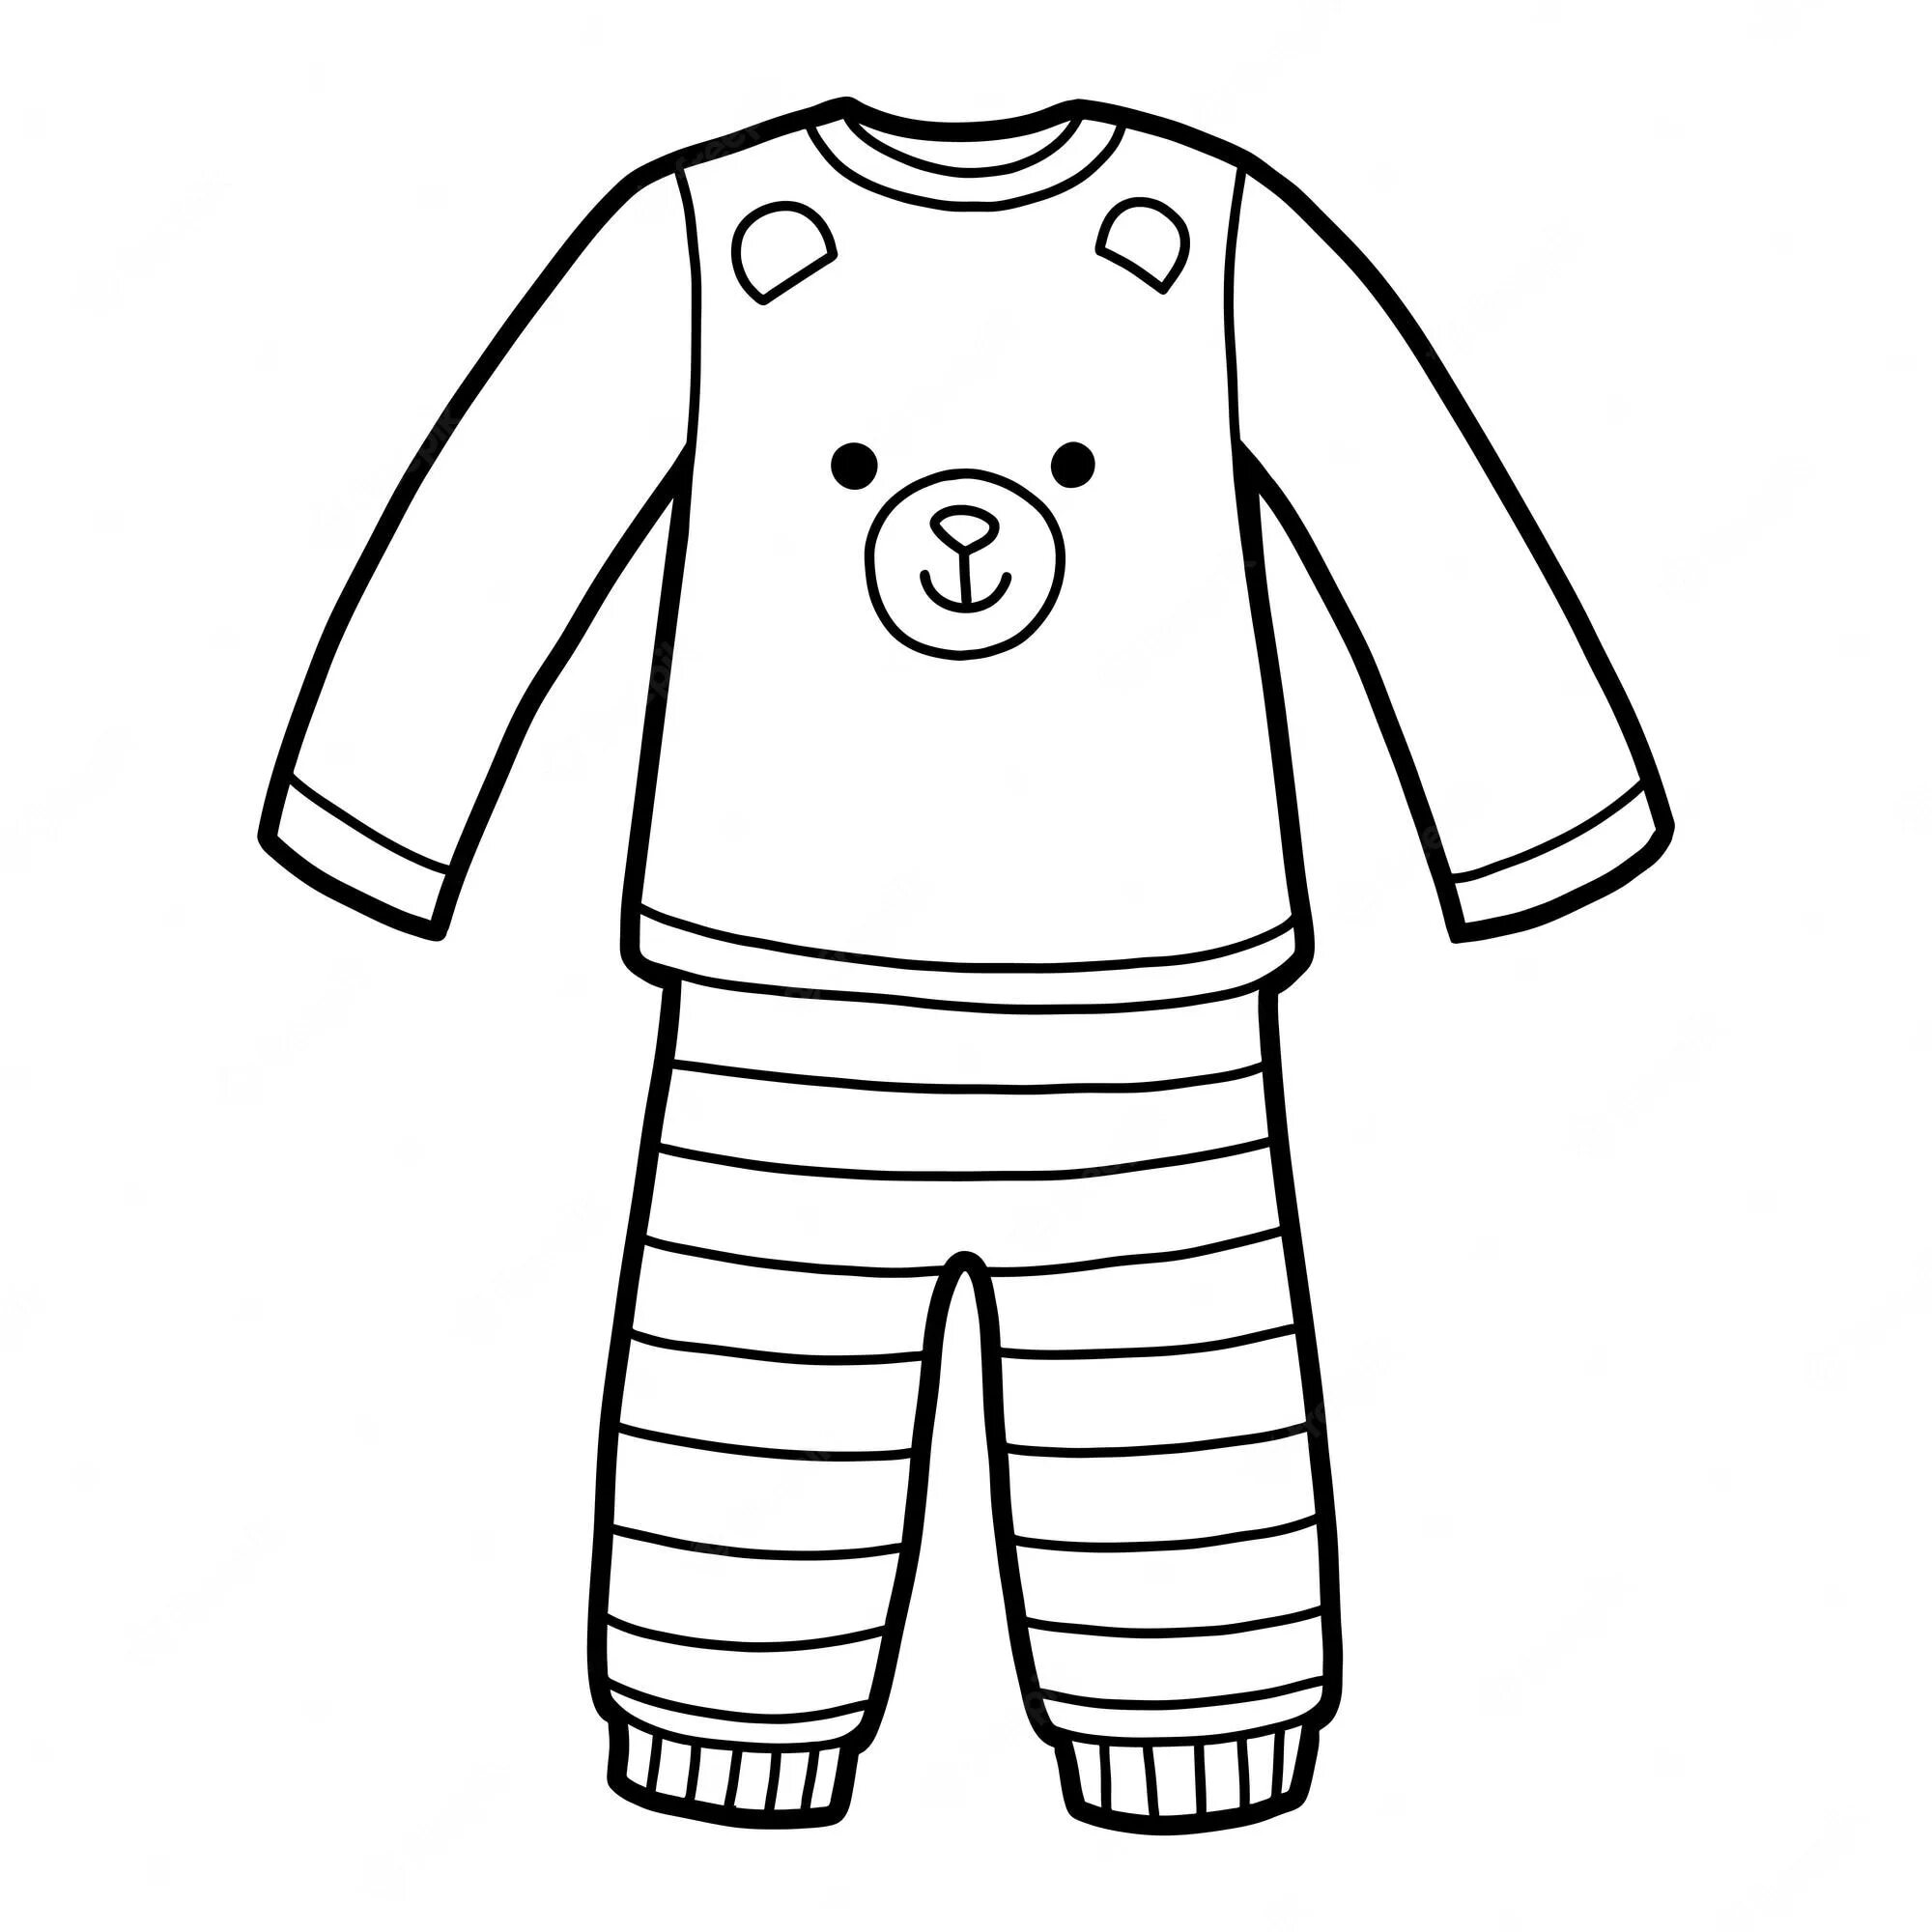 Children's pajamas #7